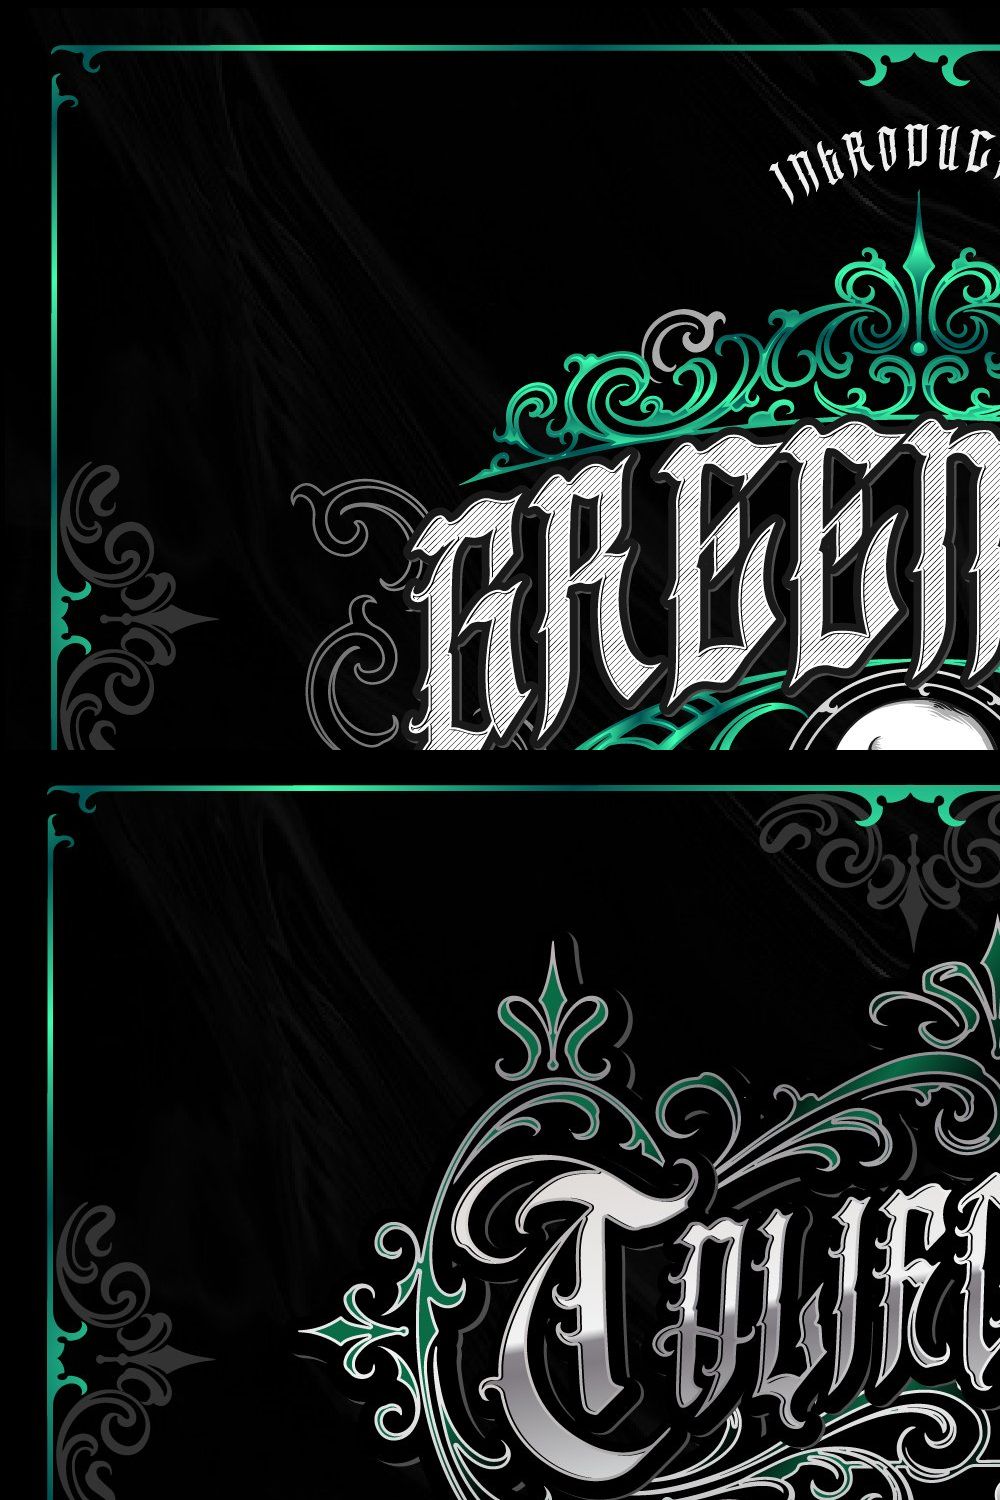 GreenBull + Decorative bonus pinterest preview image.